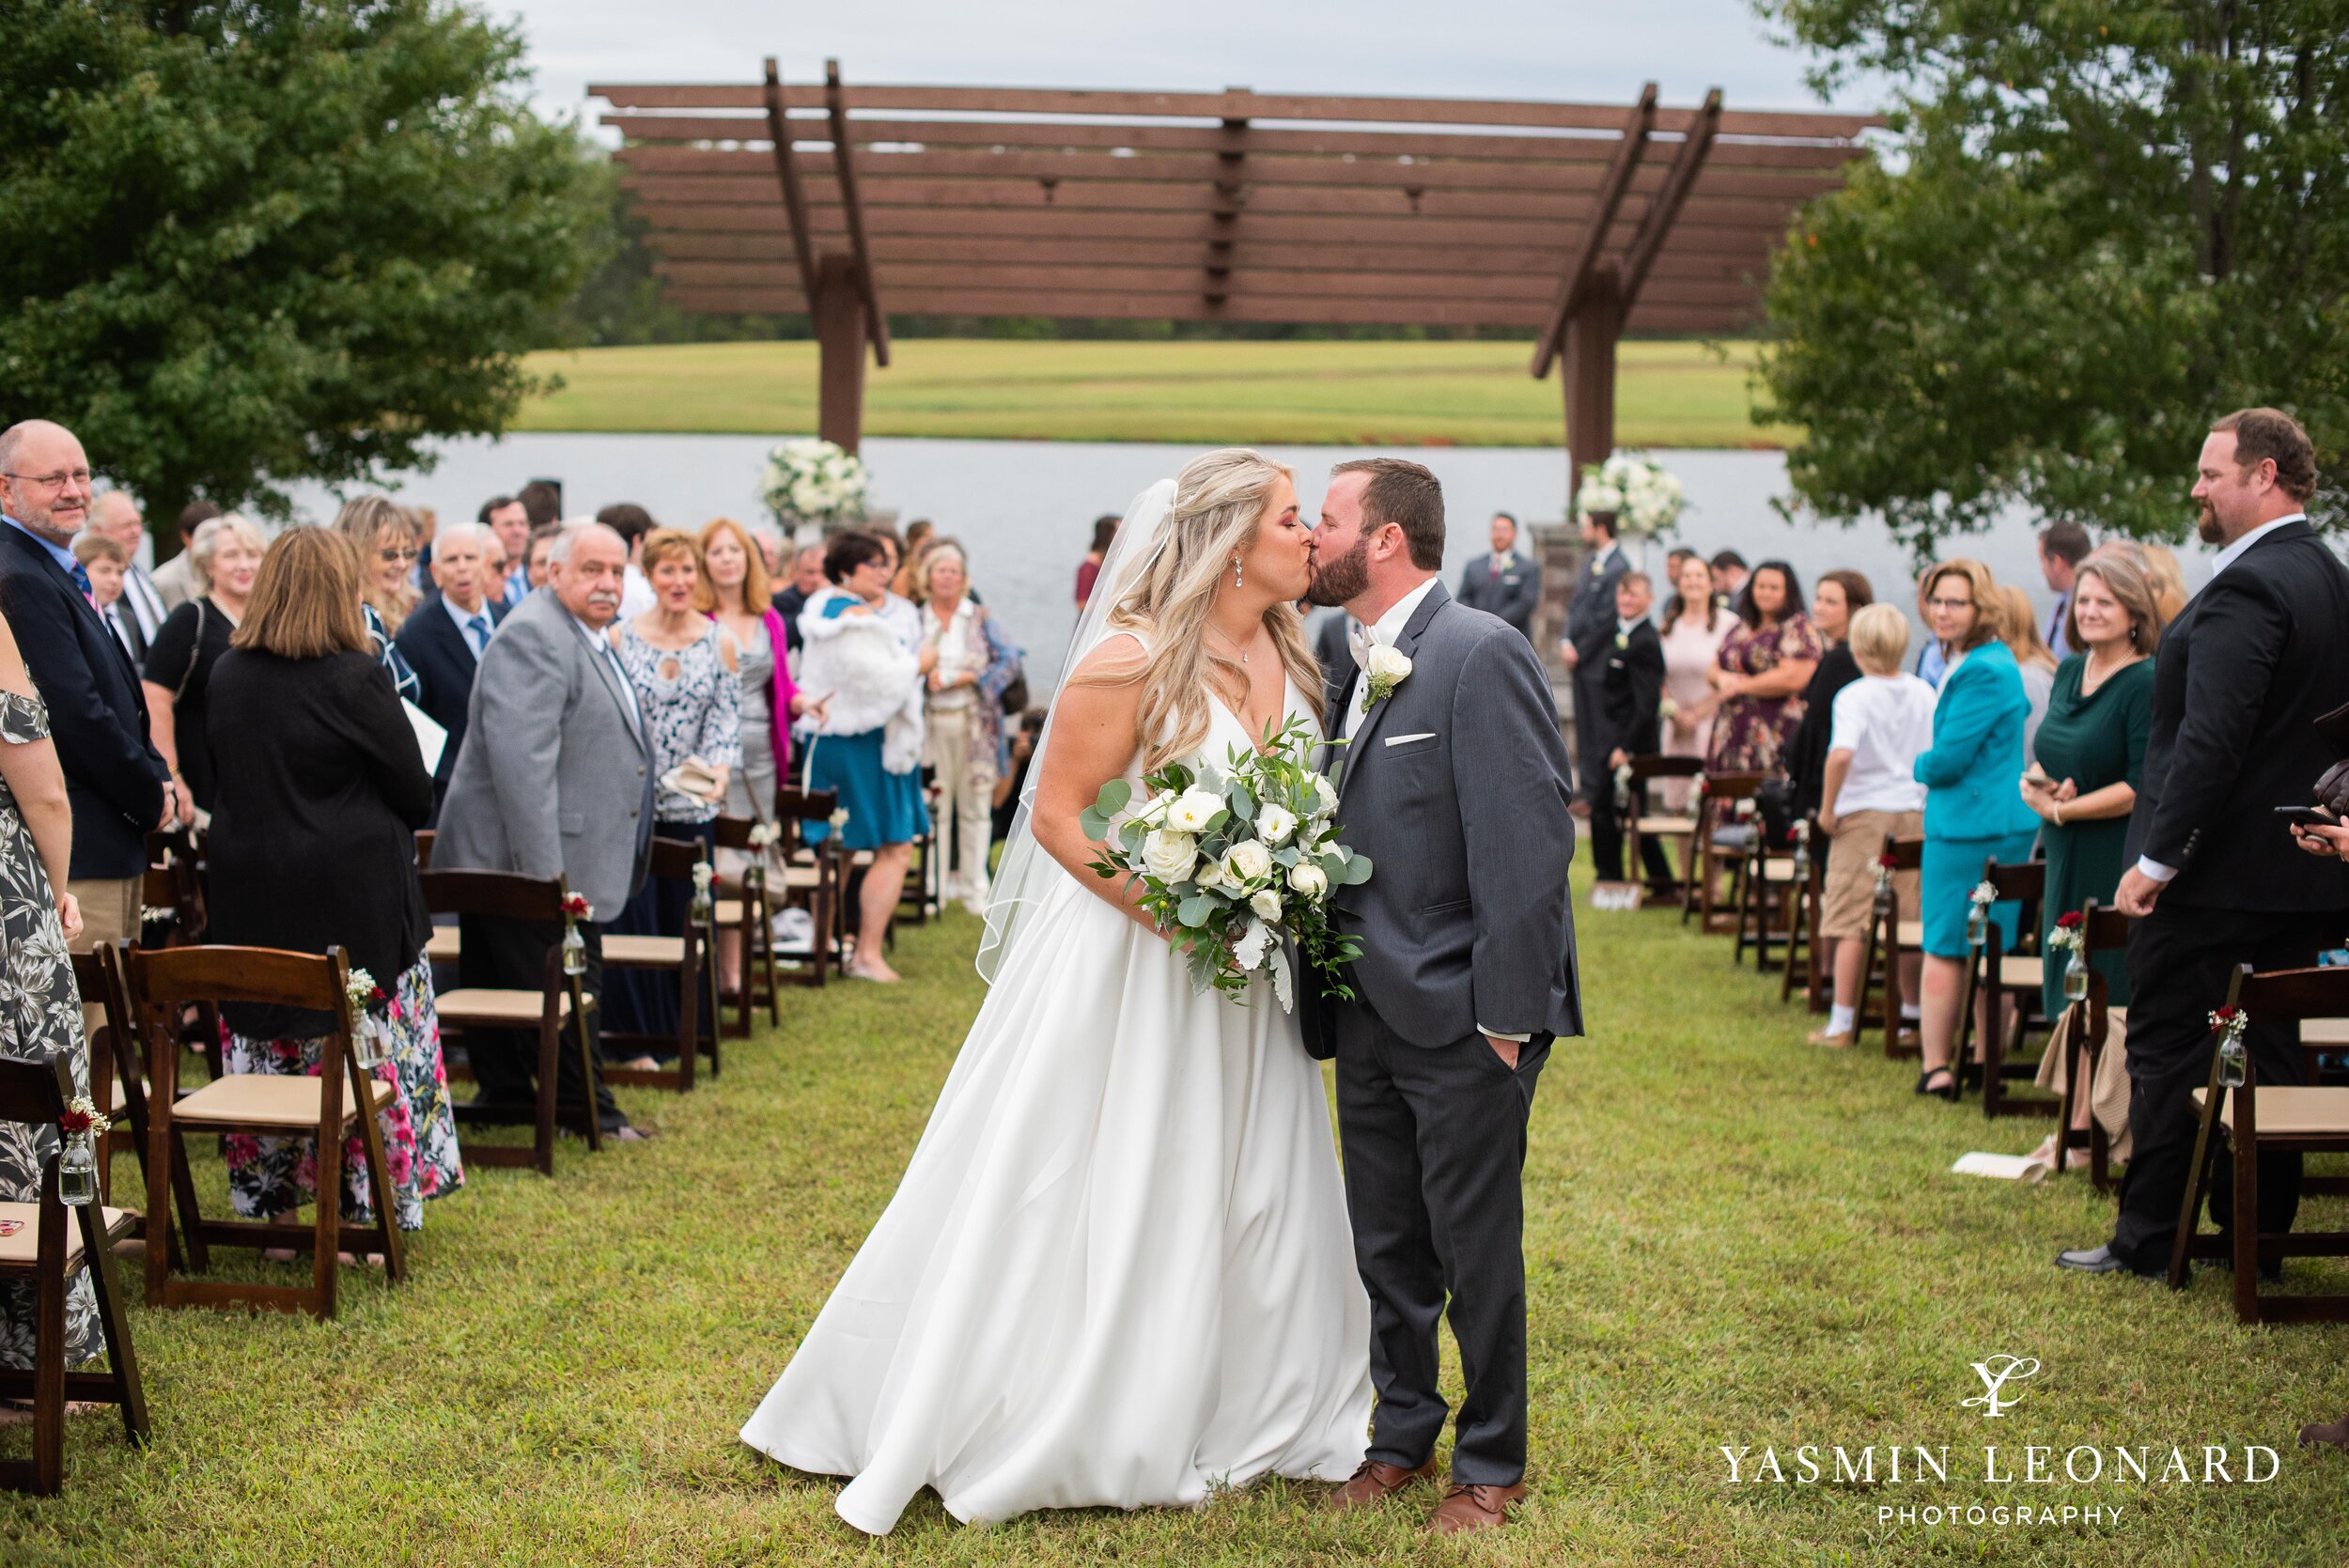 Dan and Nicole - October 5, 2019 - Adaumont - Yasmin Leonard Photography - Horse Carriage Wedding - Adaumont Wedding - High Point Wedding Photographer - Fall Wedding - Fall Wedding Colors-34.jpg